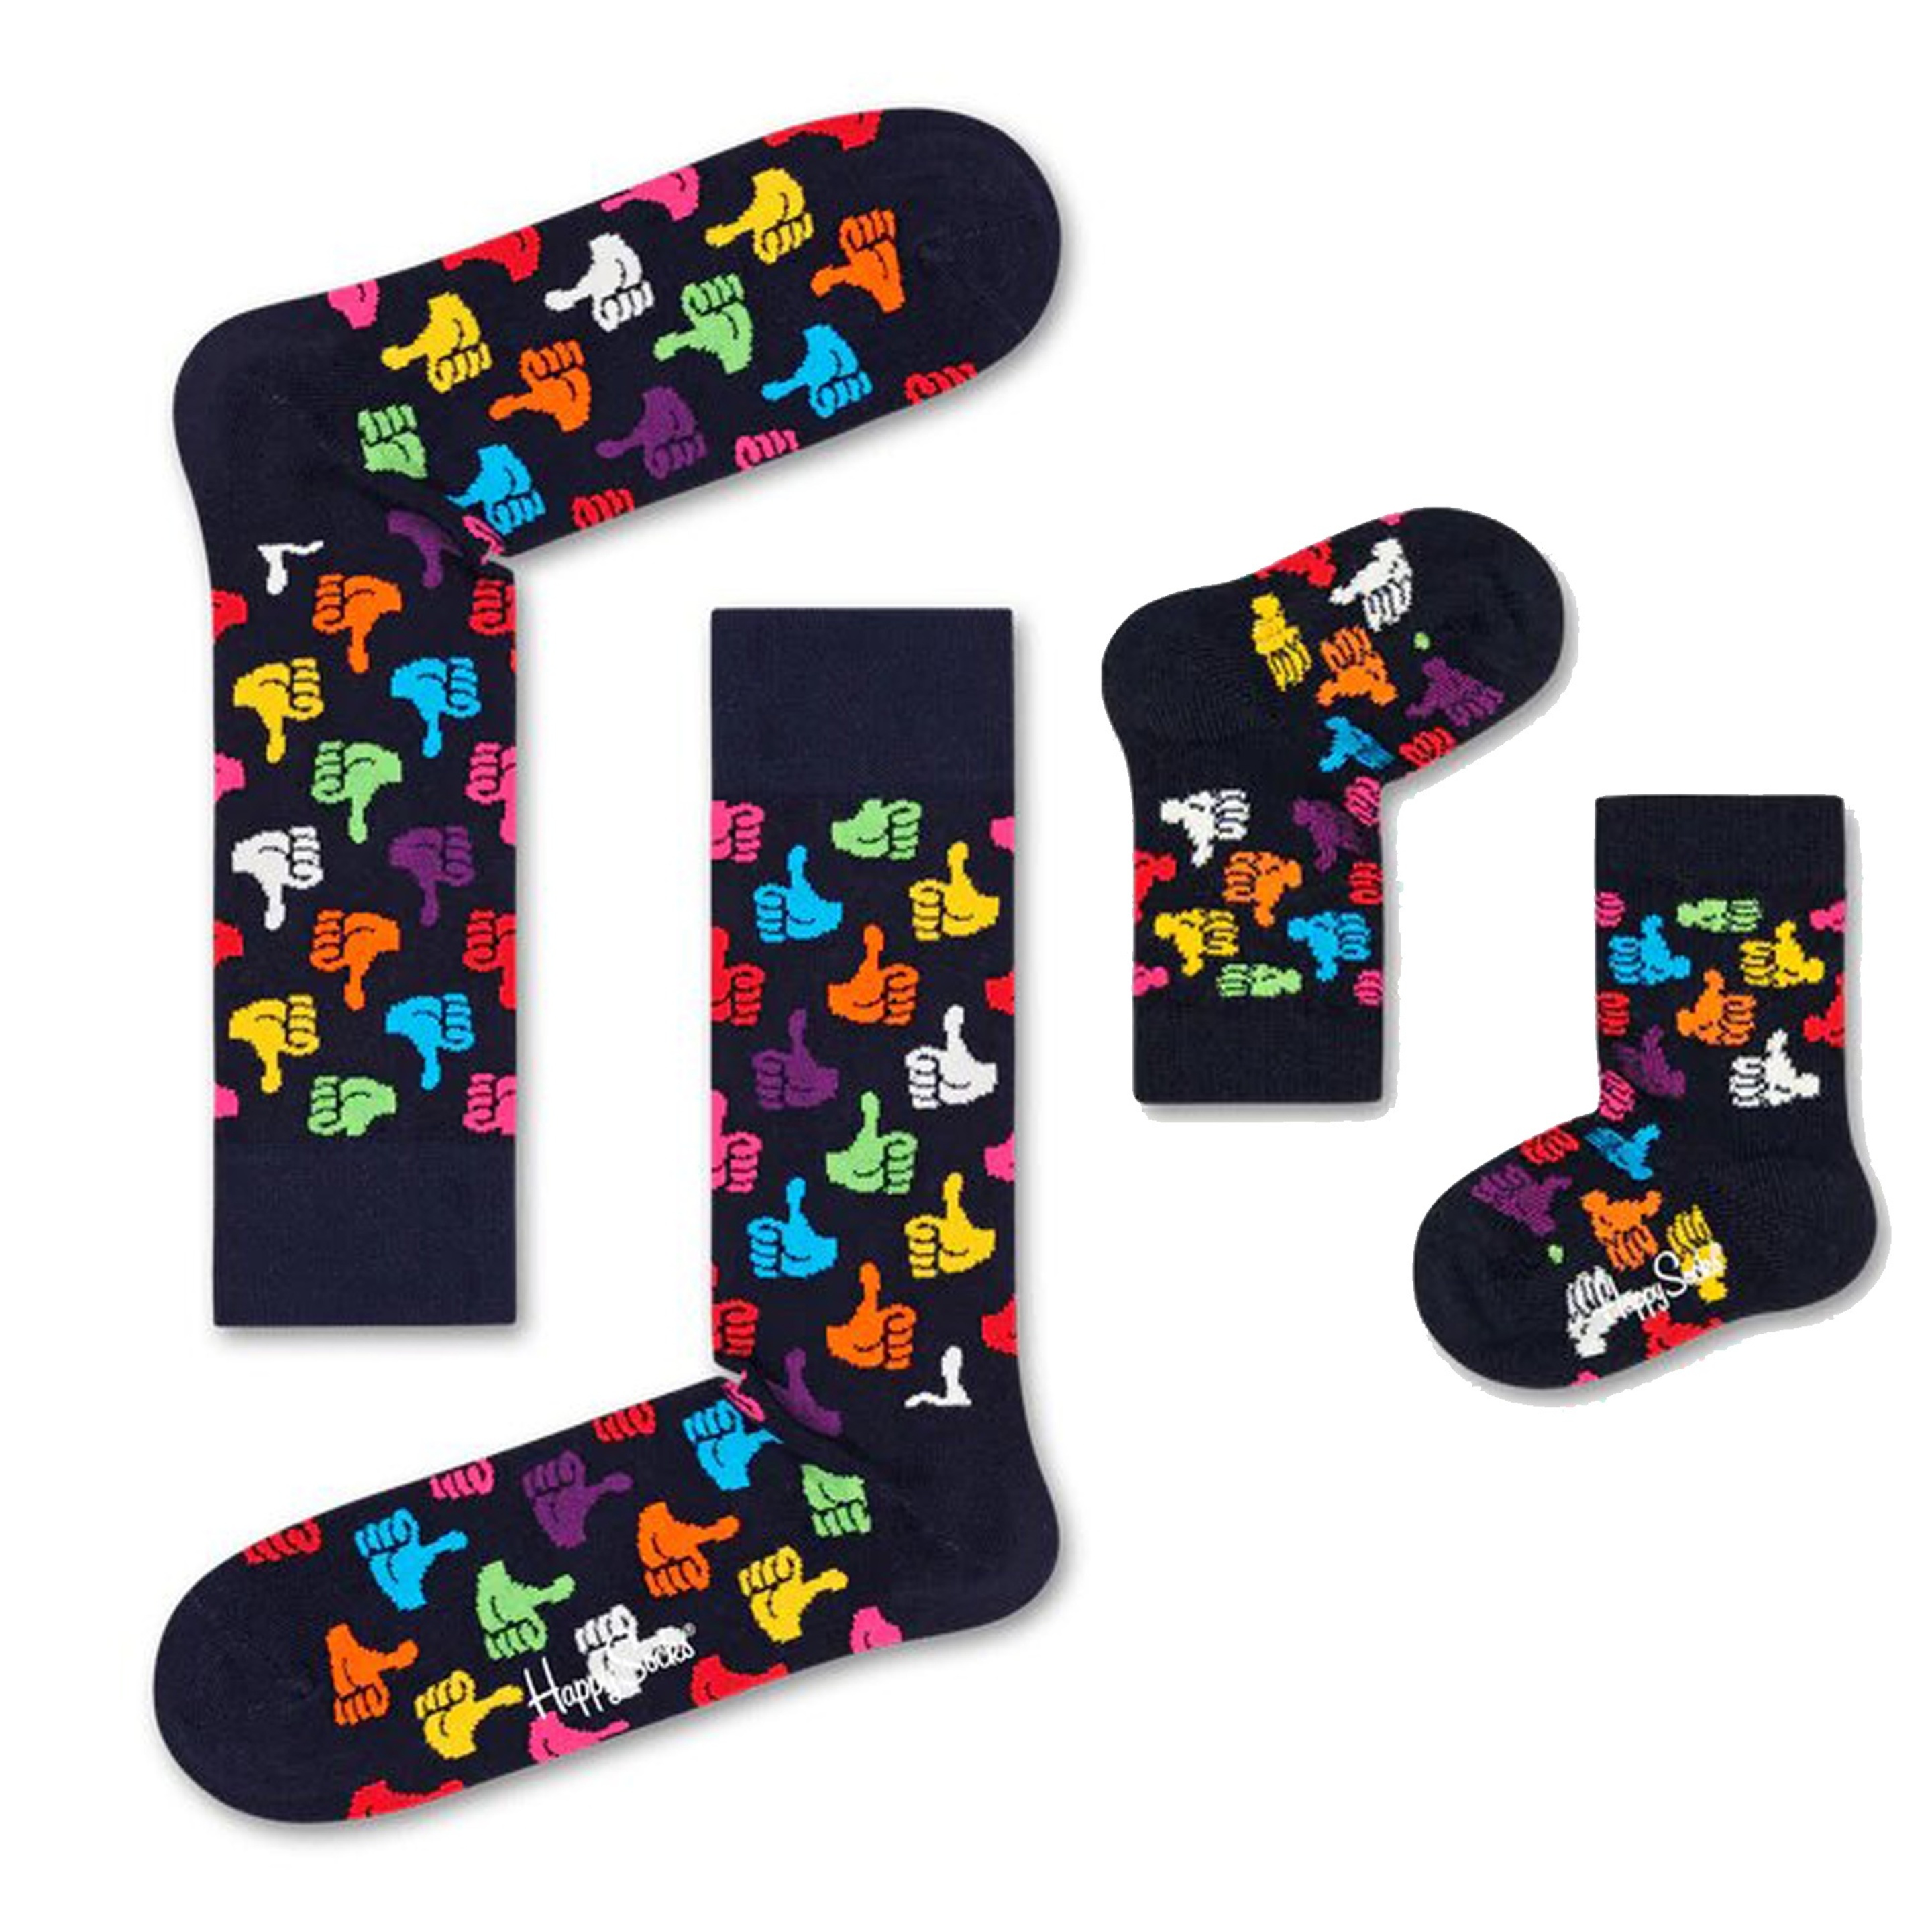 Par De Calcetines Happy Socks Mini Me Confetti Palm - Multicolor  MKP